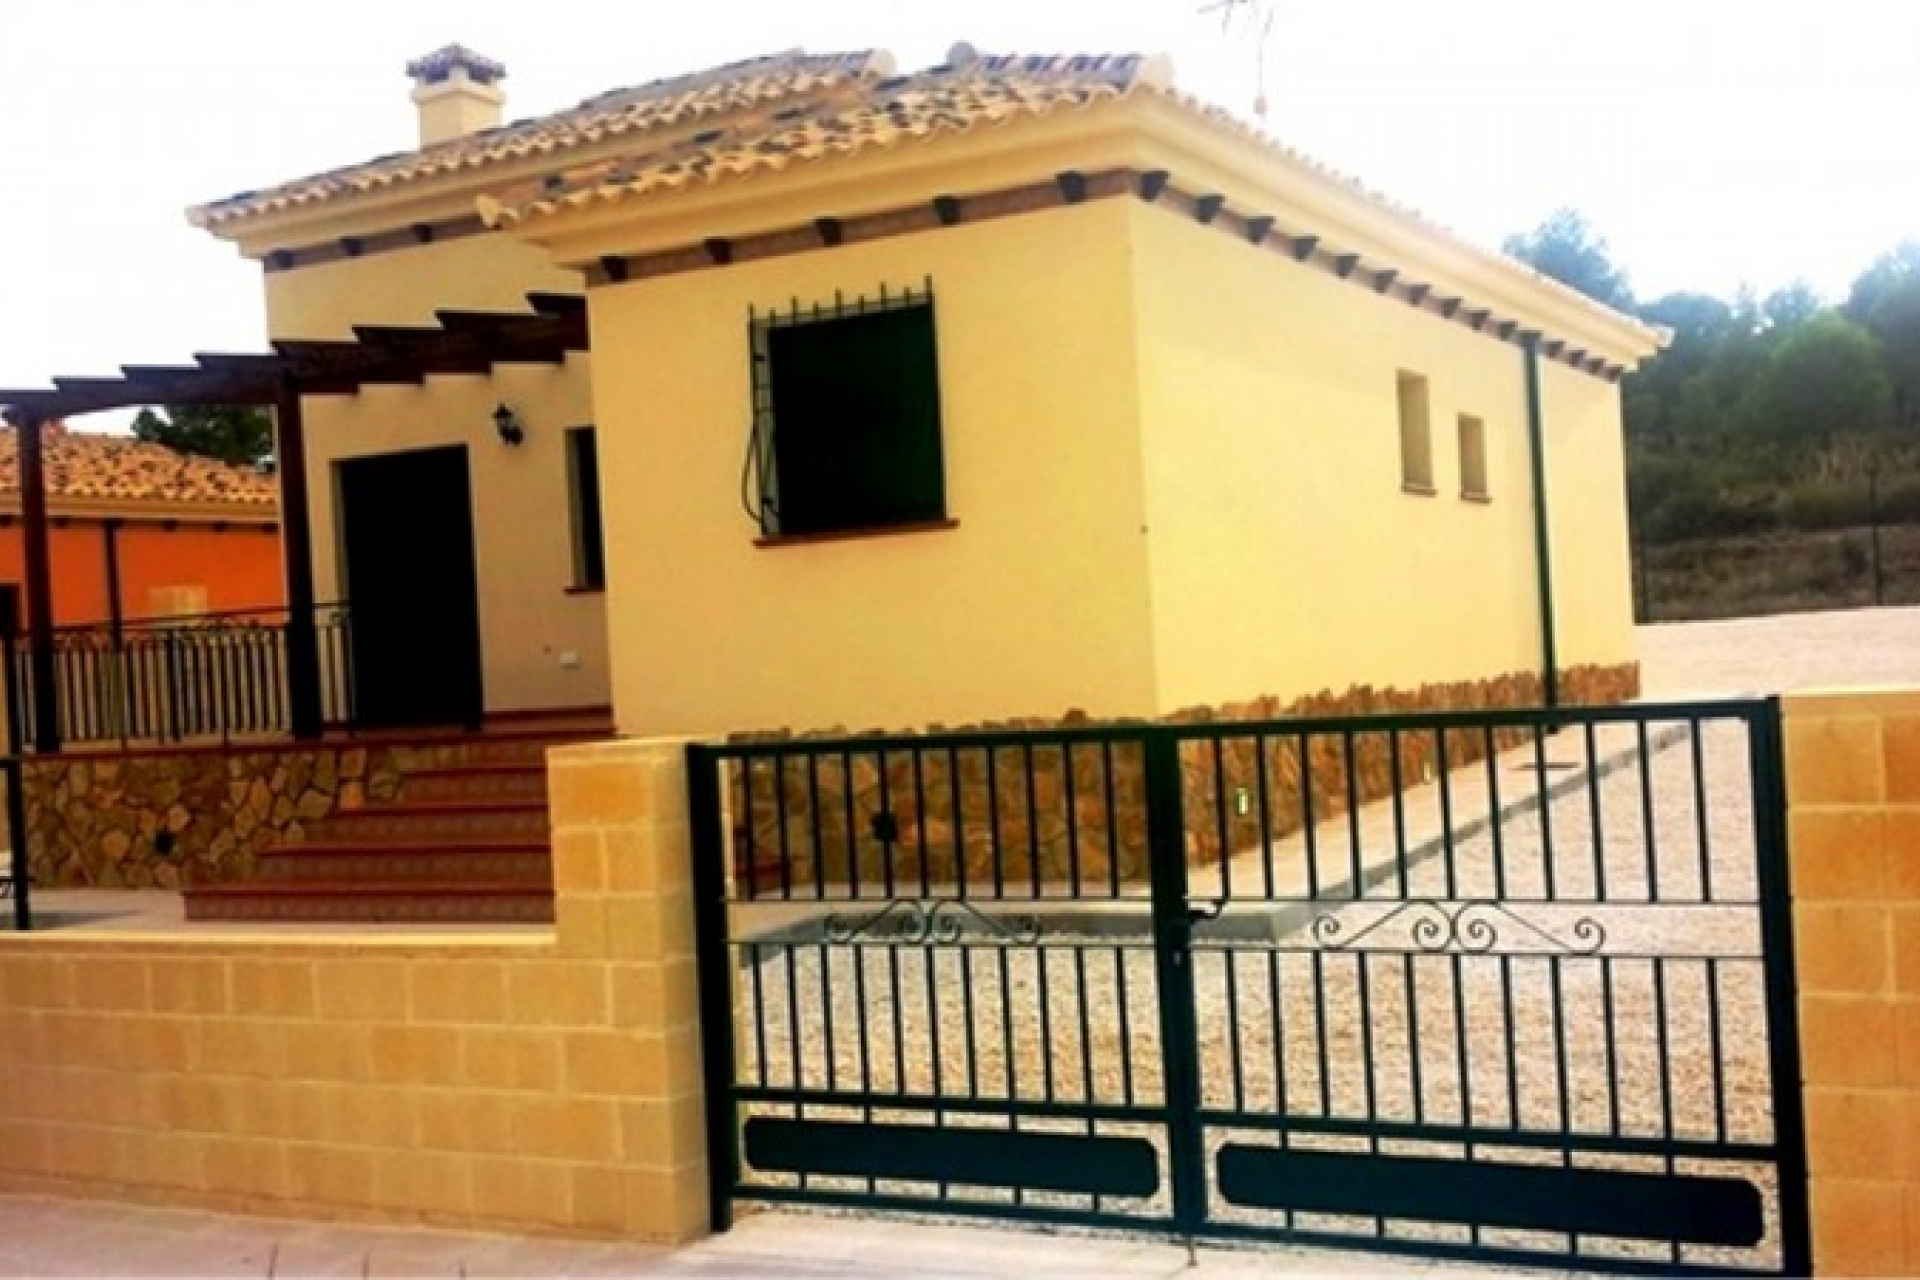 for sale detached villa in Calasparra near Murcia brand new